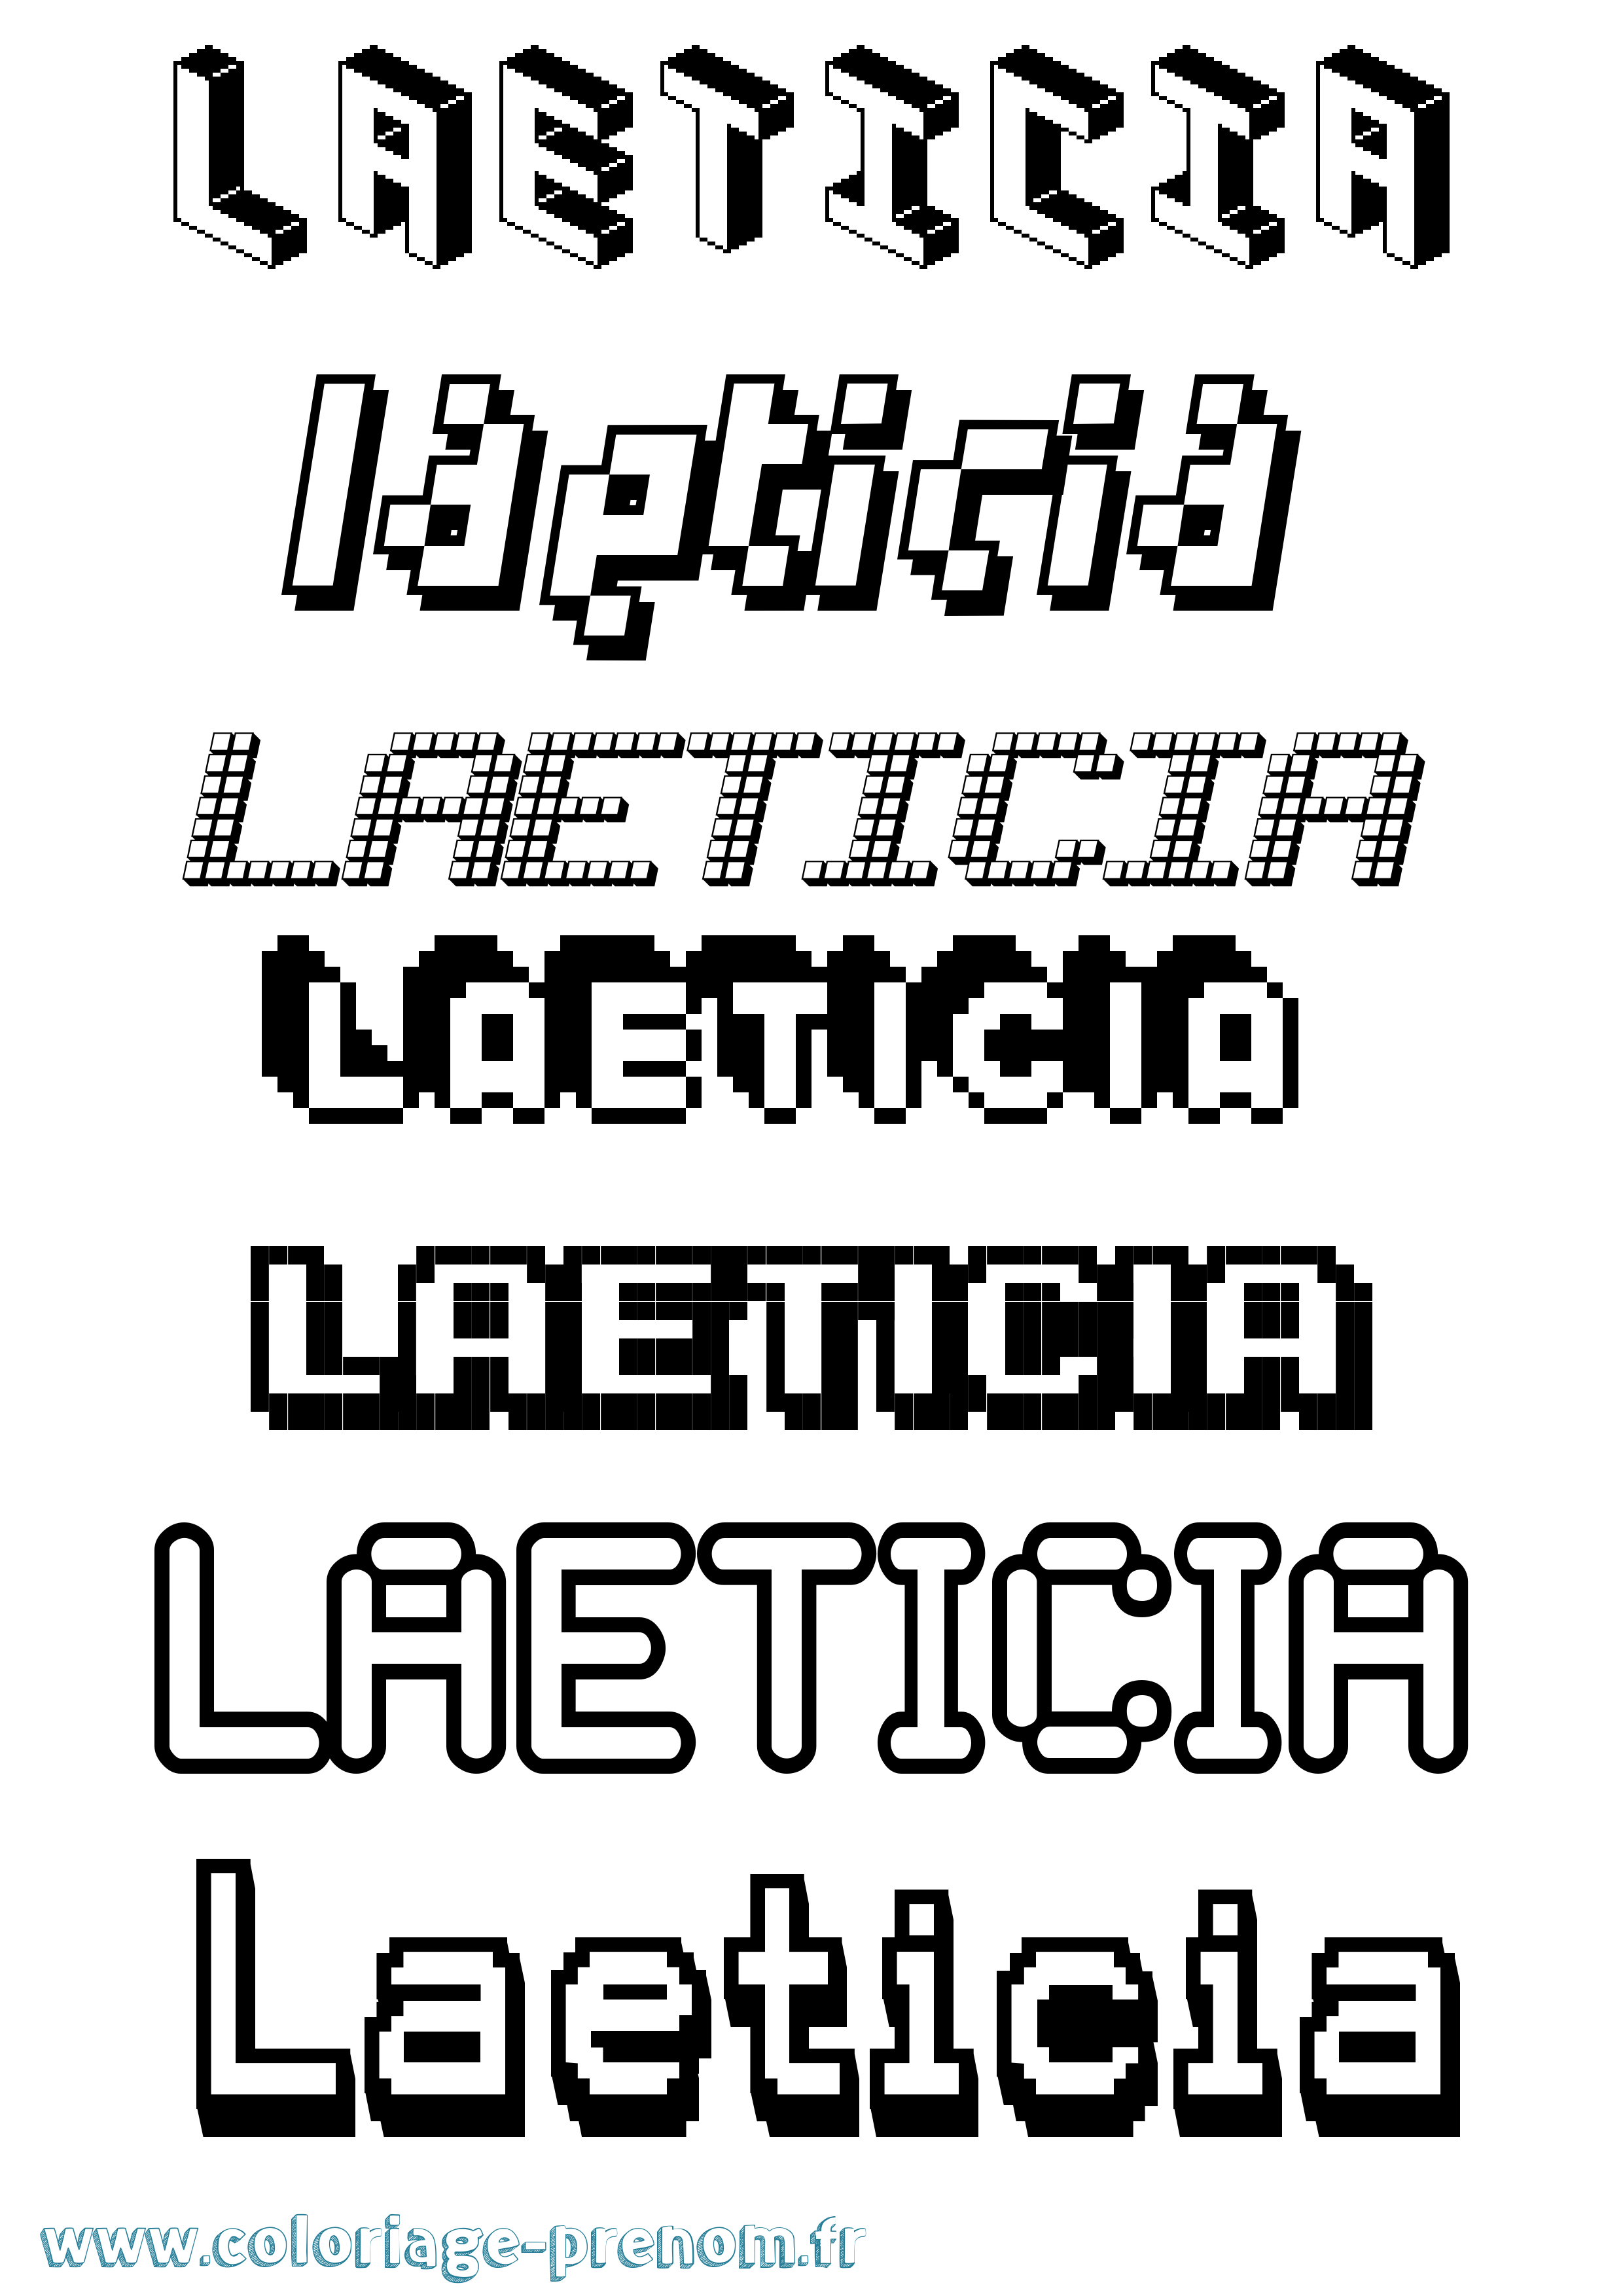 Coloriage prénom Laeticia Pixel